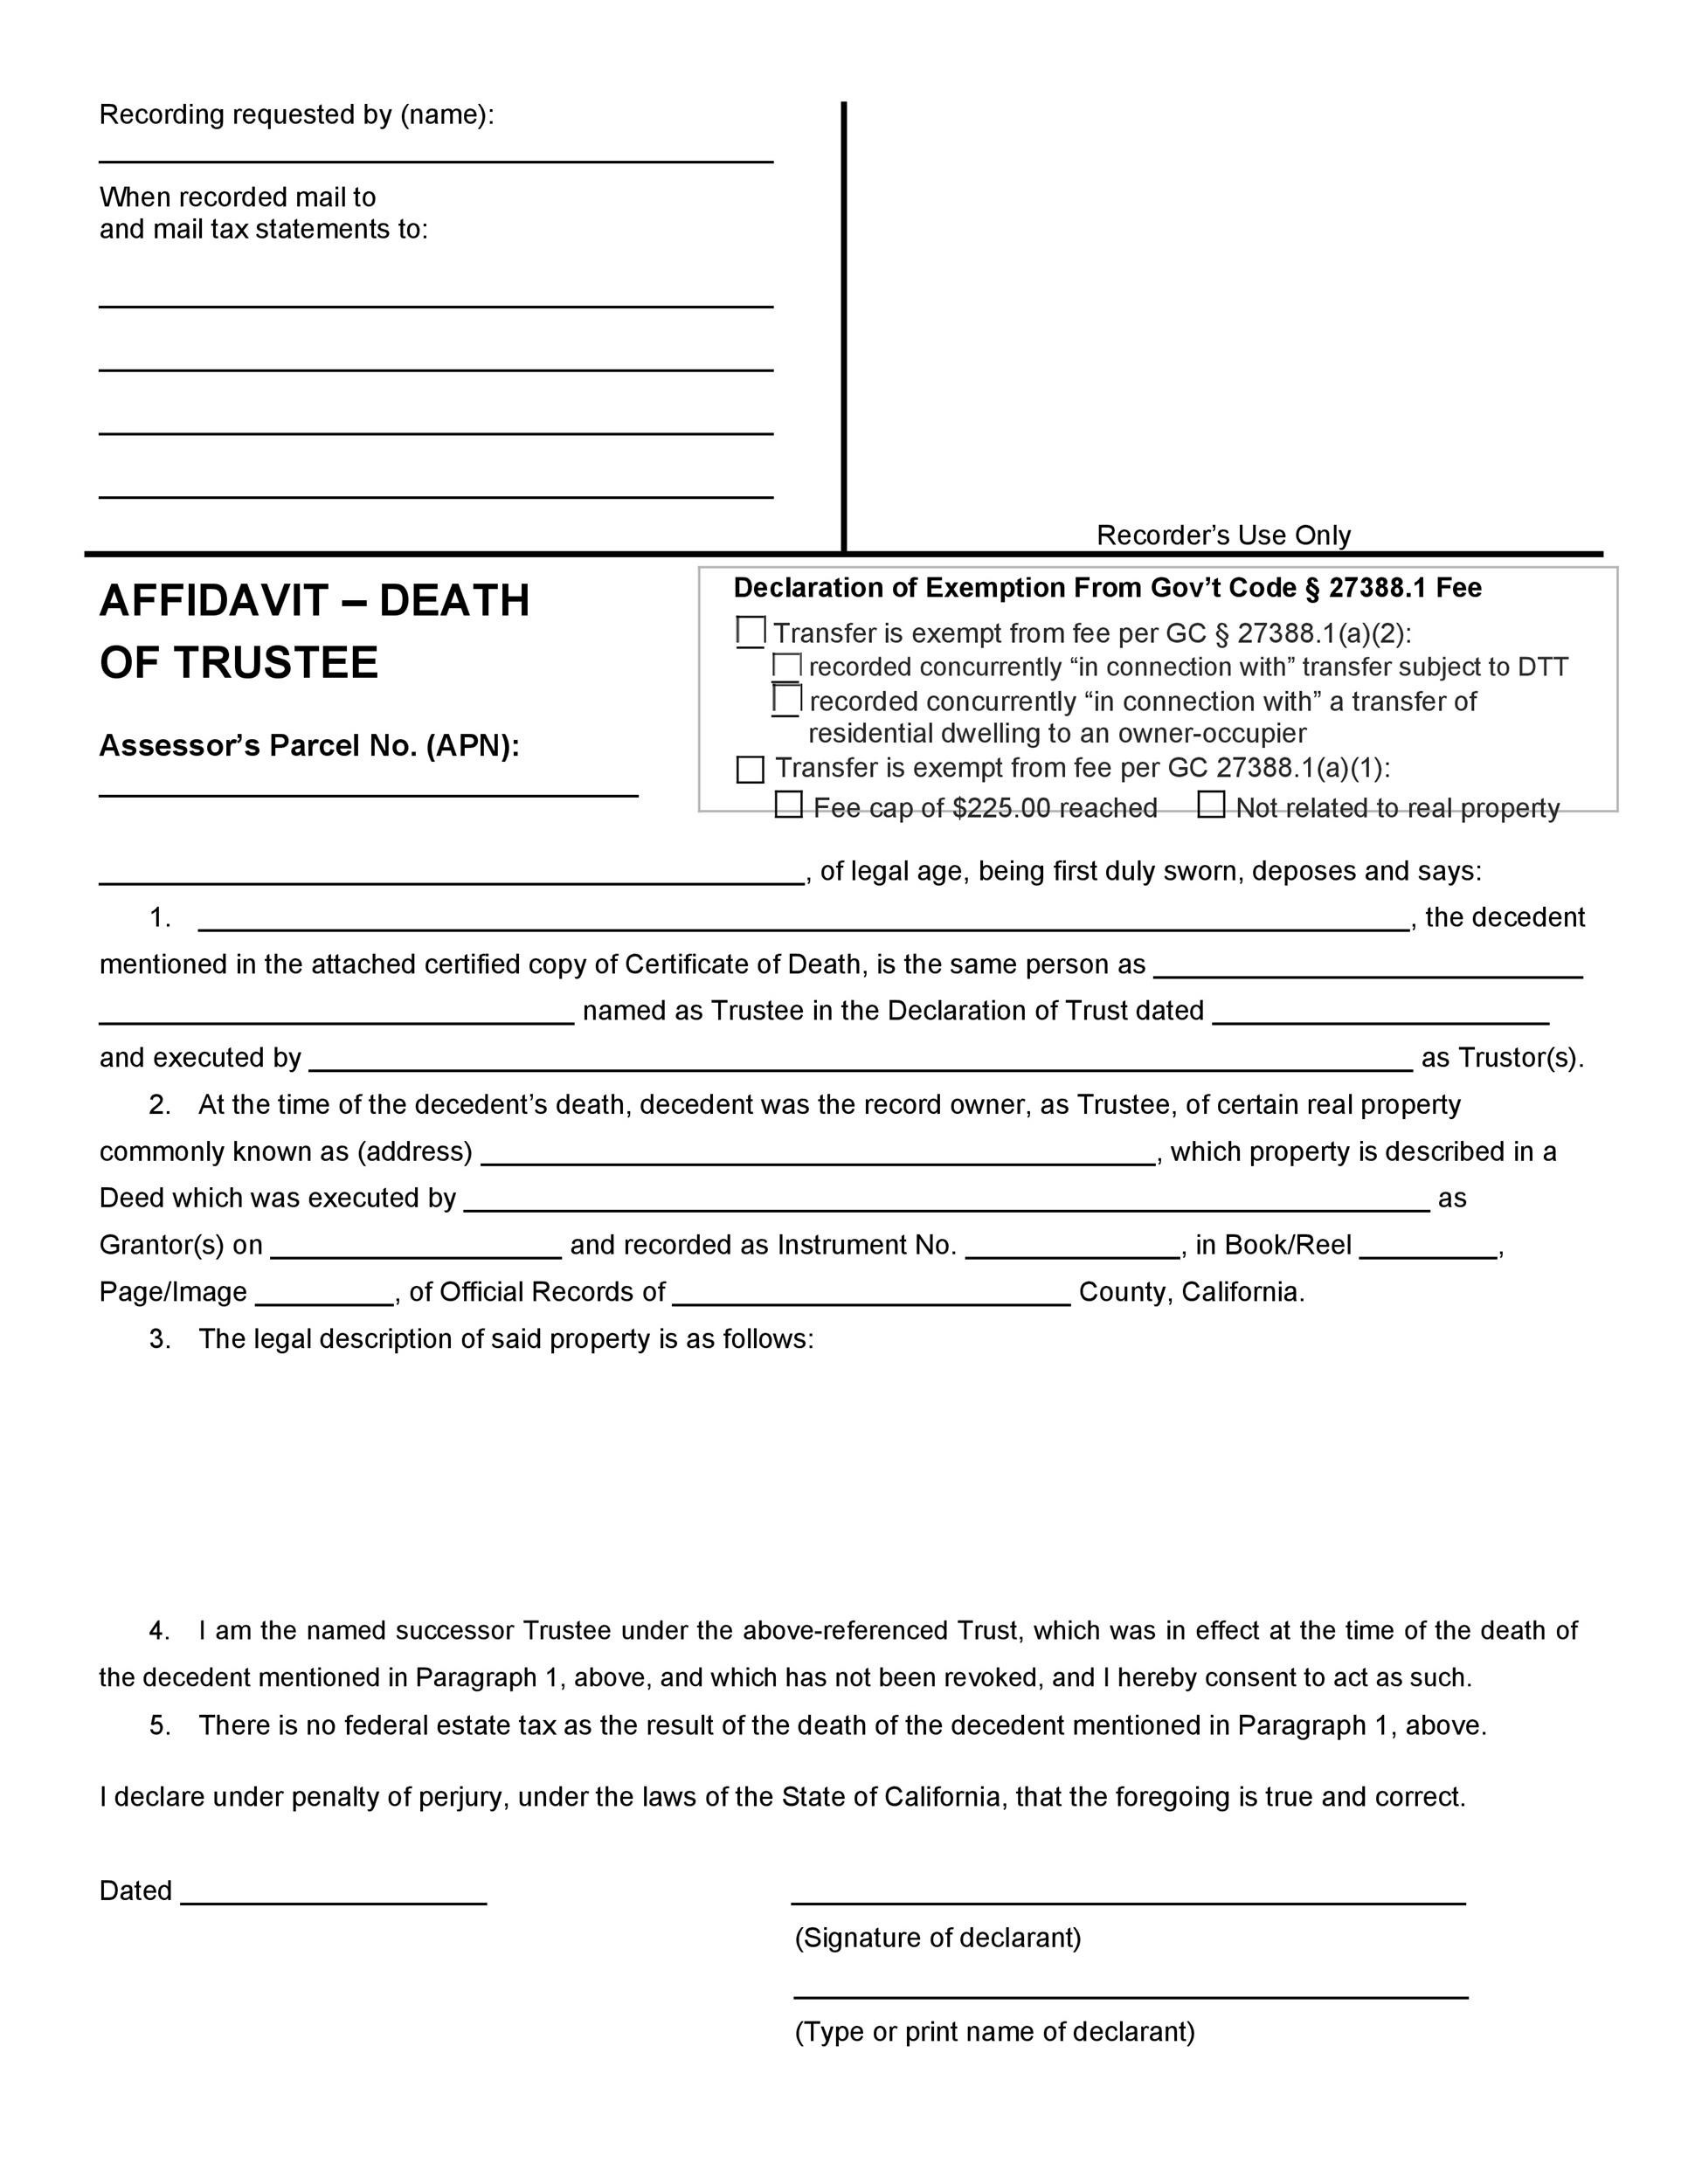 affidavit-of-death-form-download-printable-pdf-templateroller-gambaran